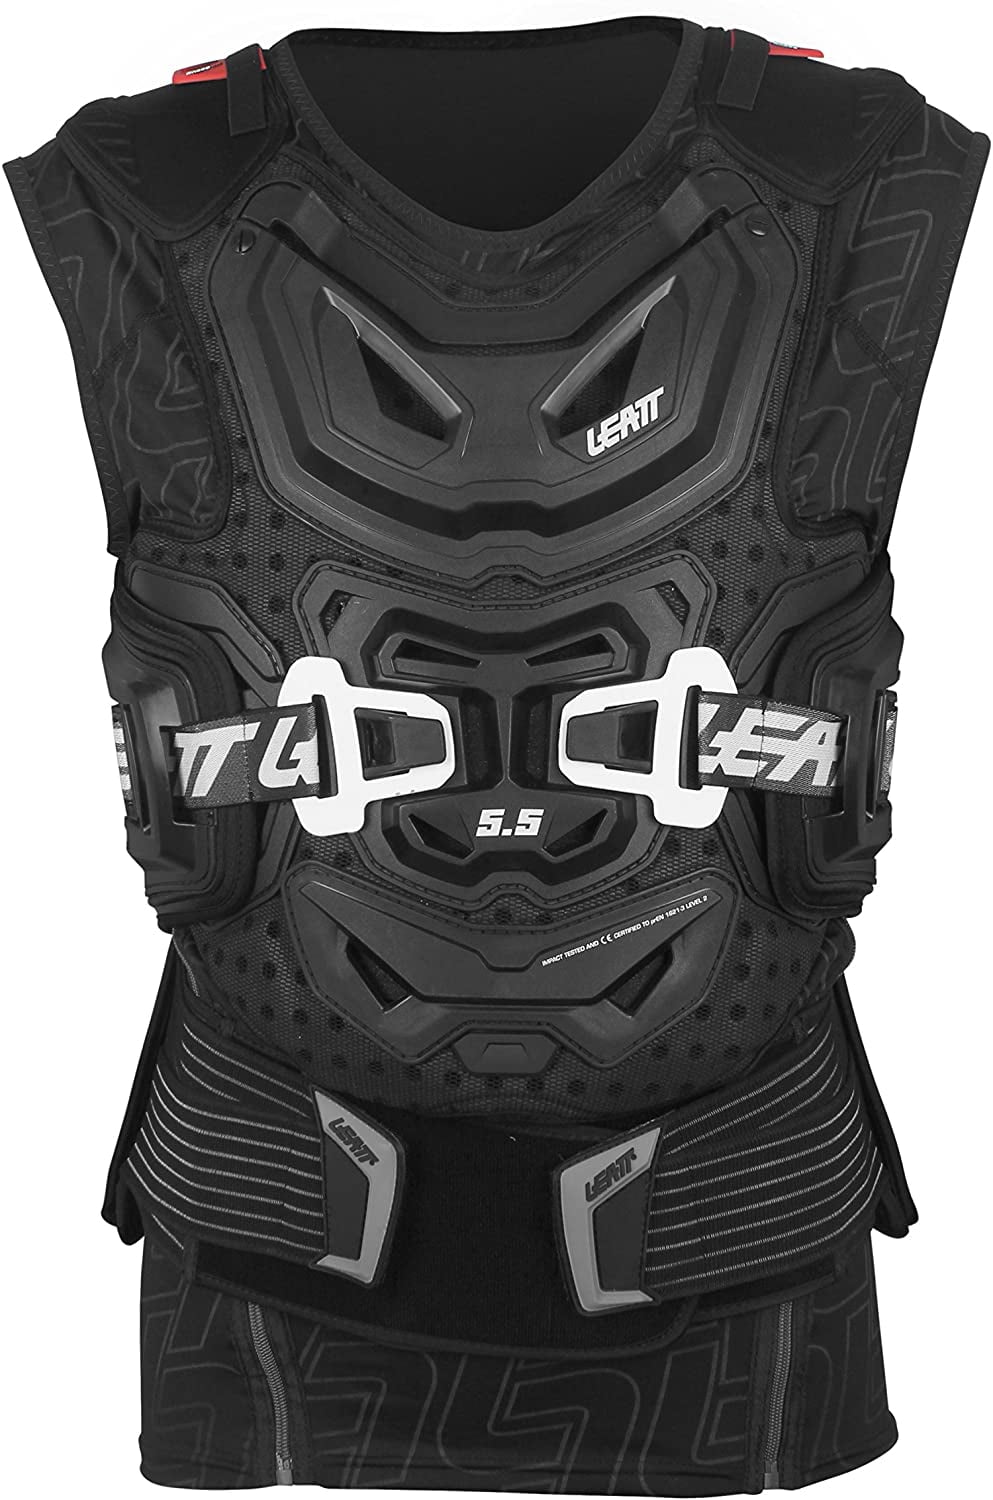 Leatt Body Vest 5.5 Front and Back Safety Imapct Protection - ATV MX ...